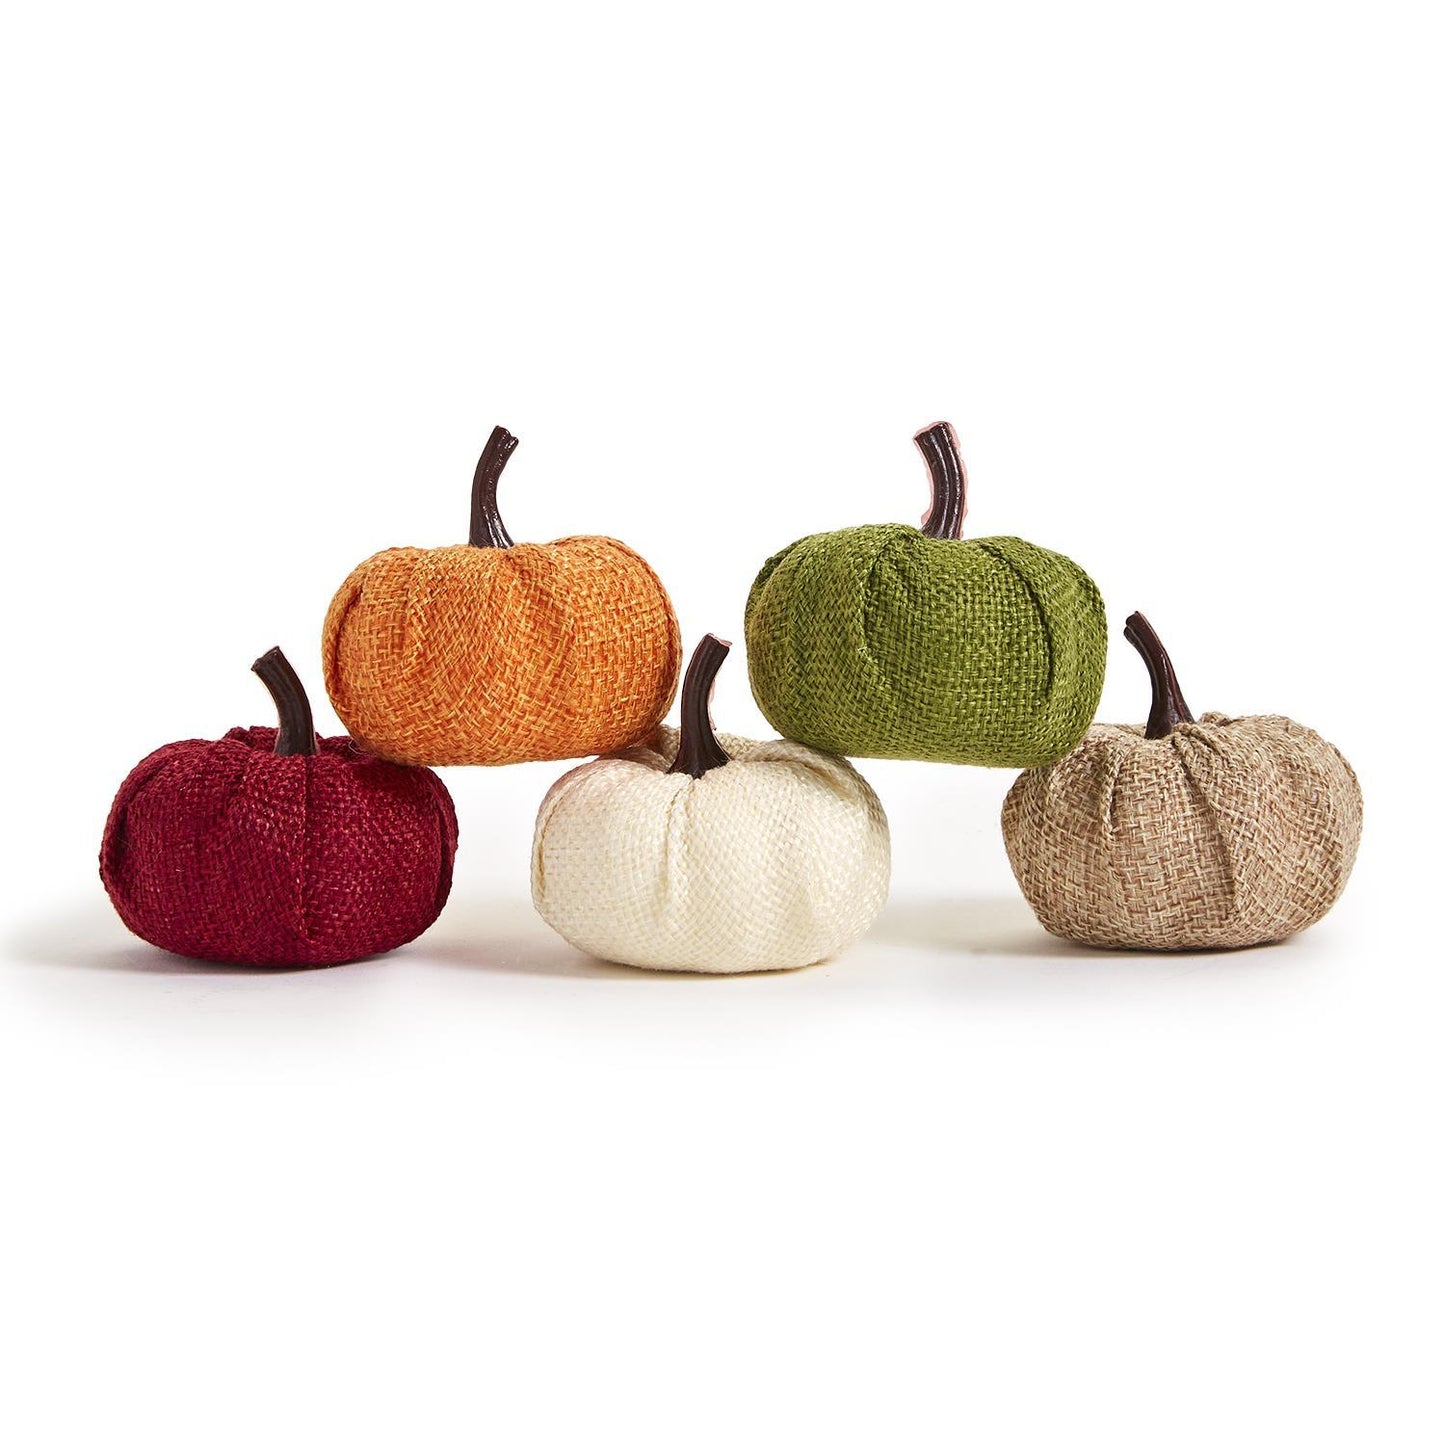 Two's Company Refill For Pumpkins 75-Pieces Mini Pumpkin in 5 Colors